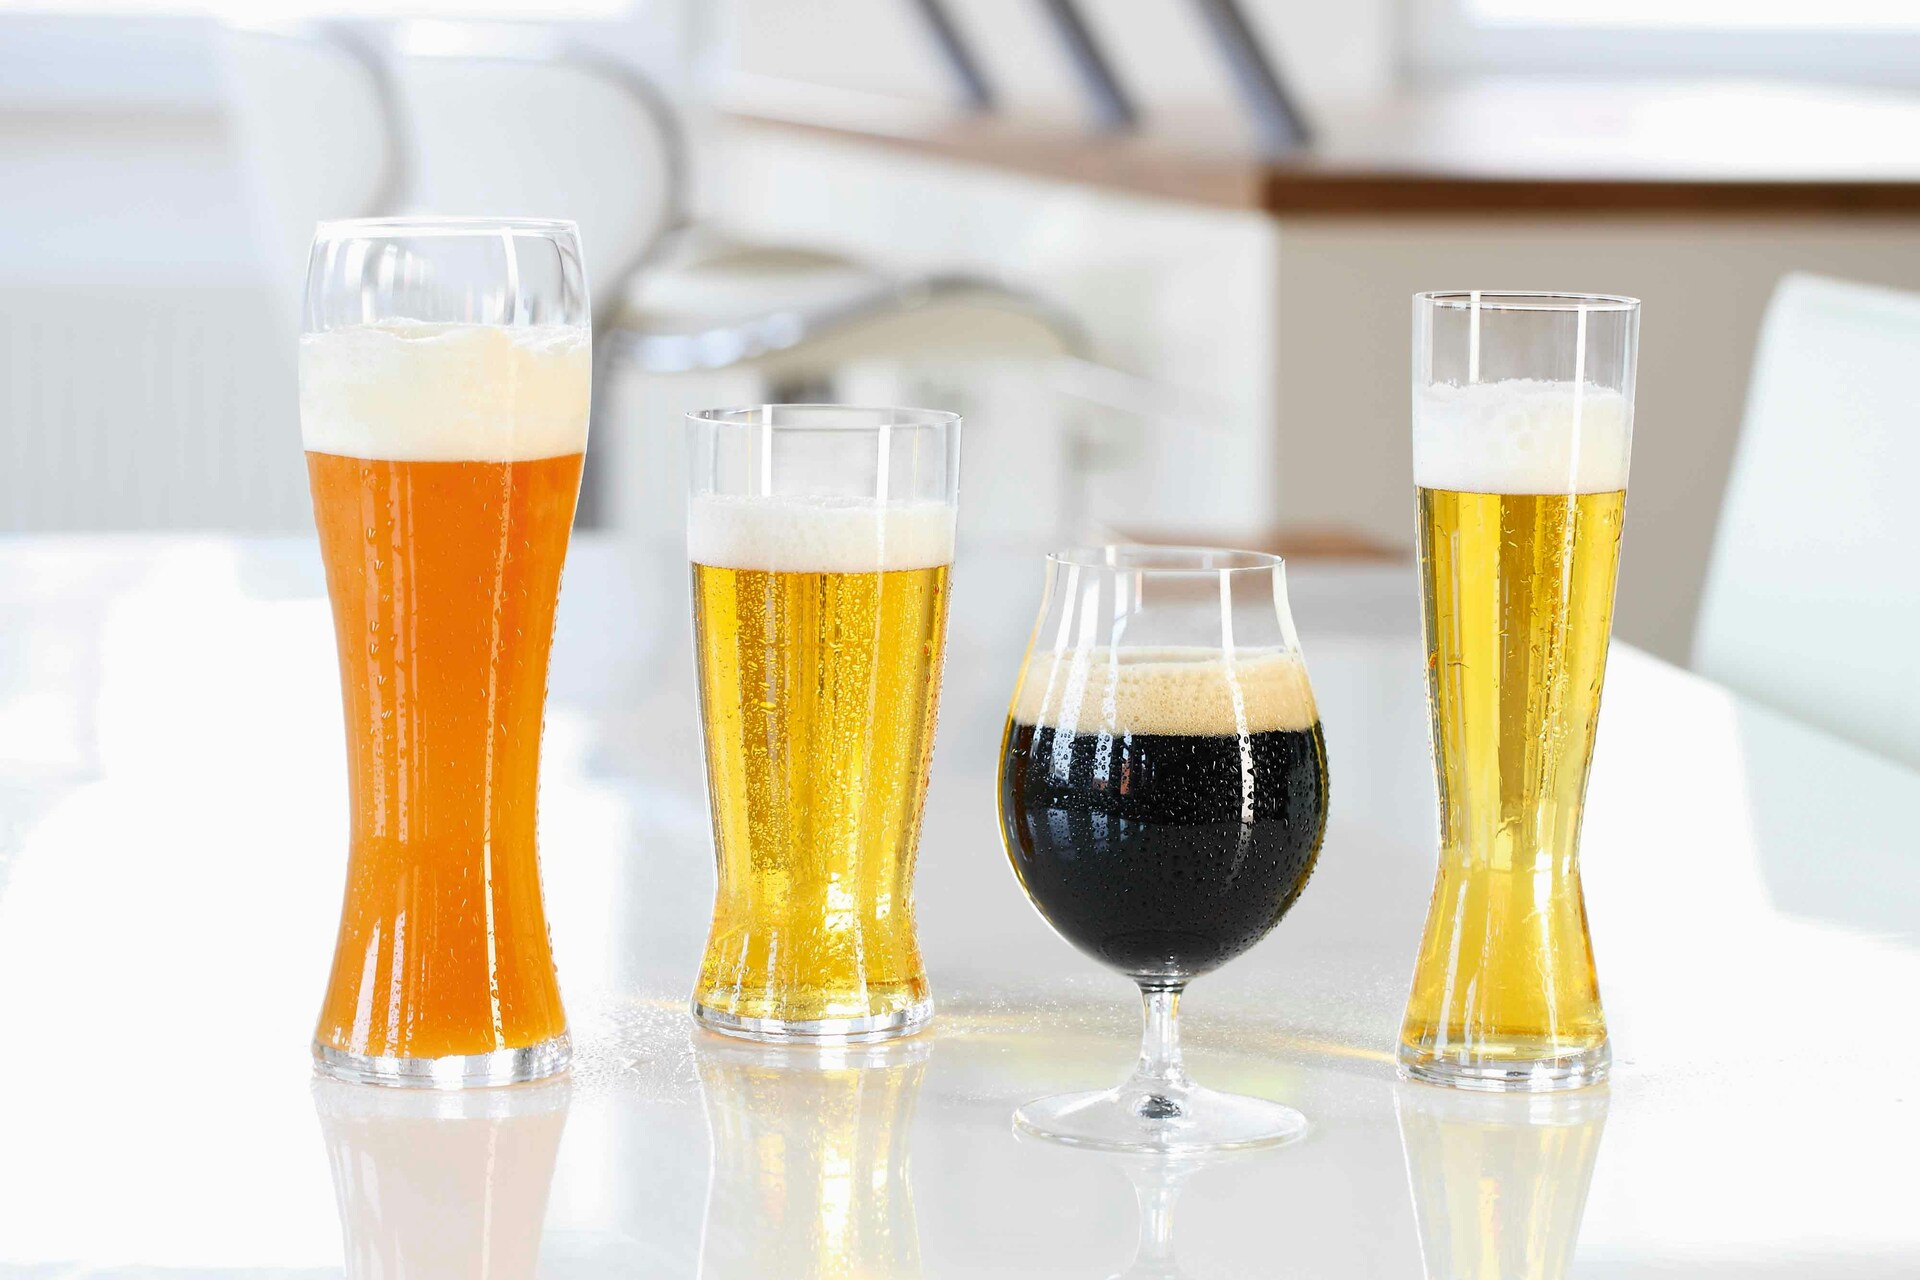 https://royaldesign.com/image/2/spiegelau-beer-classic-tasting-glass-kit-4-pcs-2